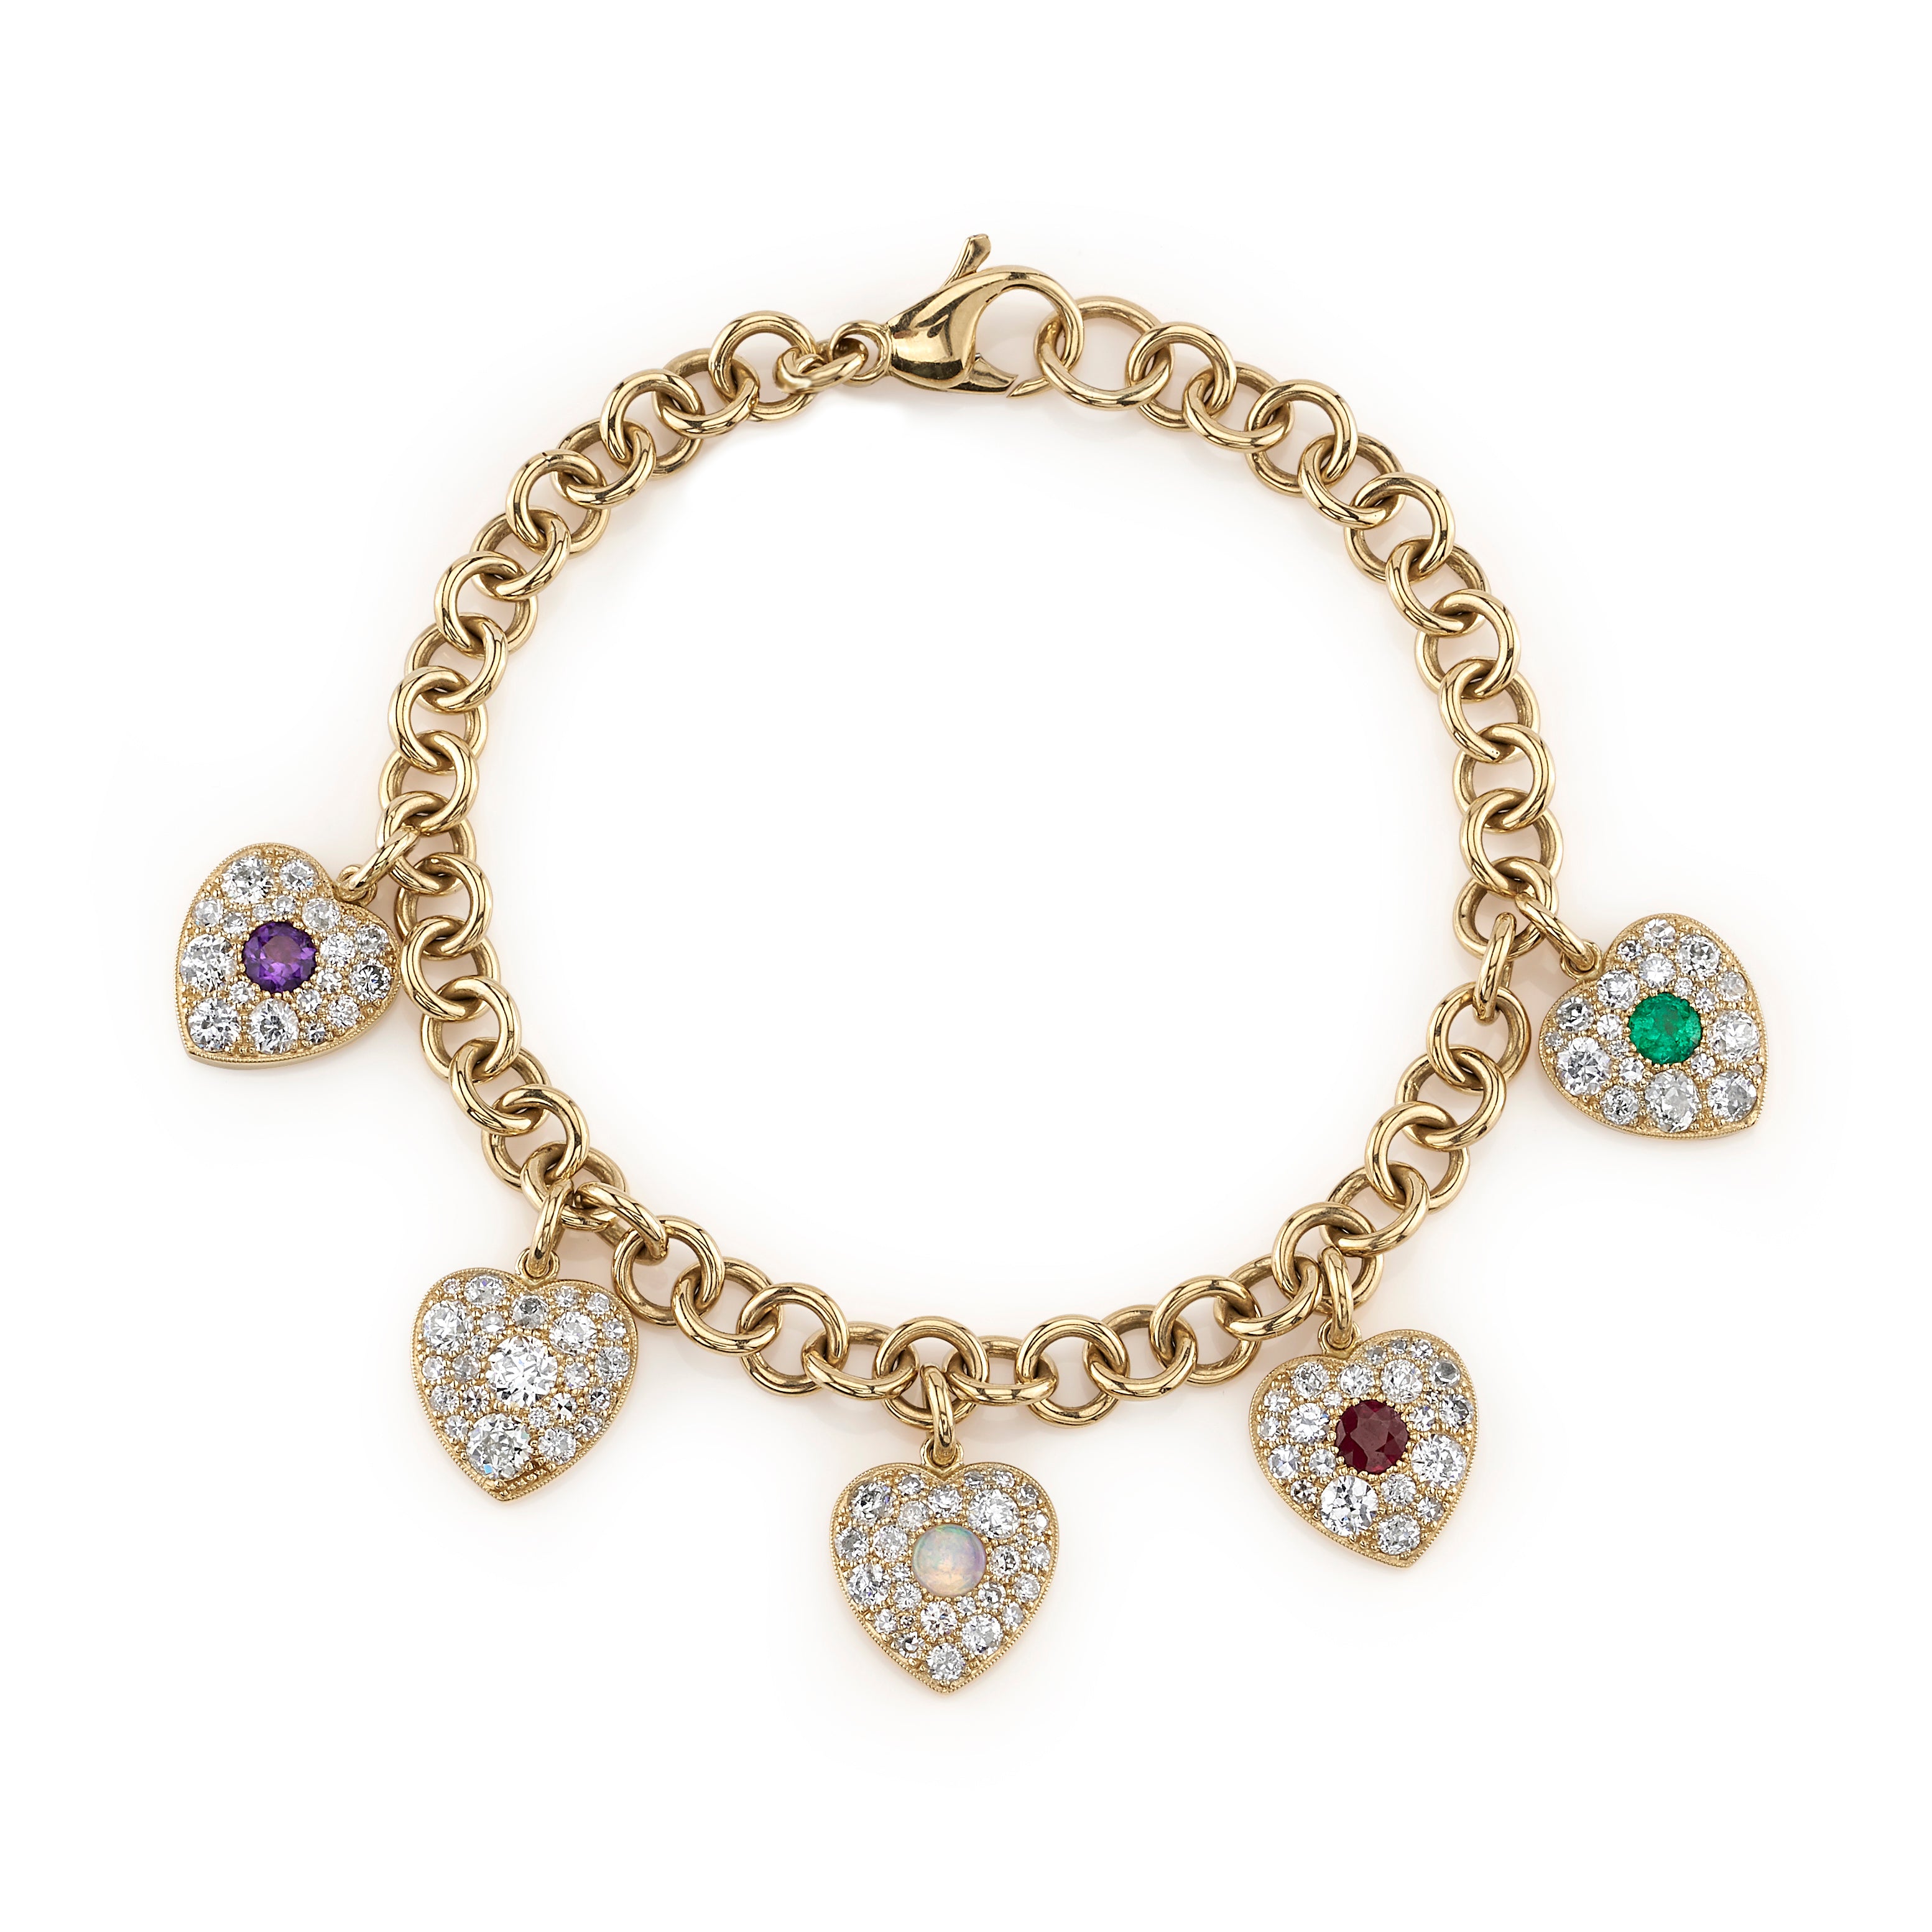 White Gold Charm Bracelet, Diamond Charm Bracelet, Link Charm Bracelet,  Dainty Charm Bracelet Heart Moon Sun Star Circle - Etsy